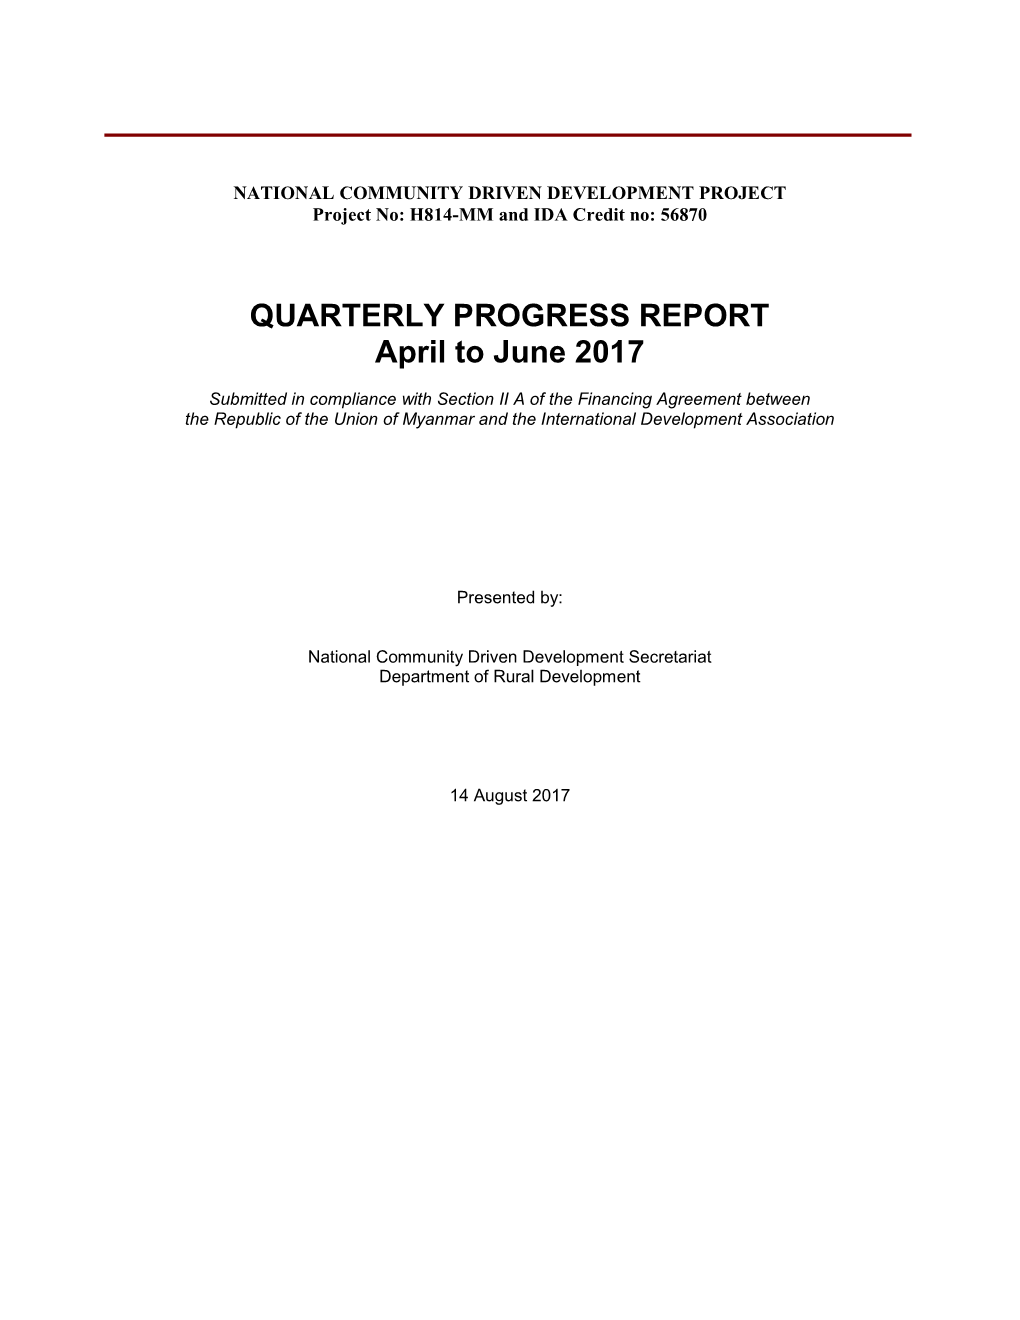 QUARTERLY PROGRESS REPORT April to June 2017